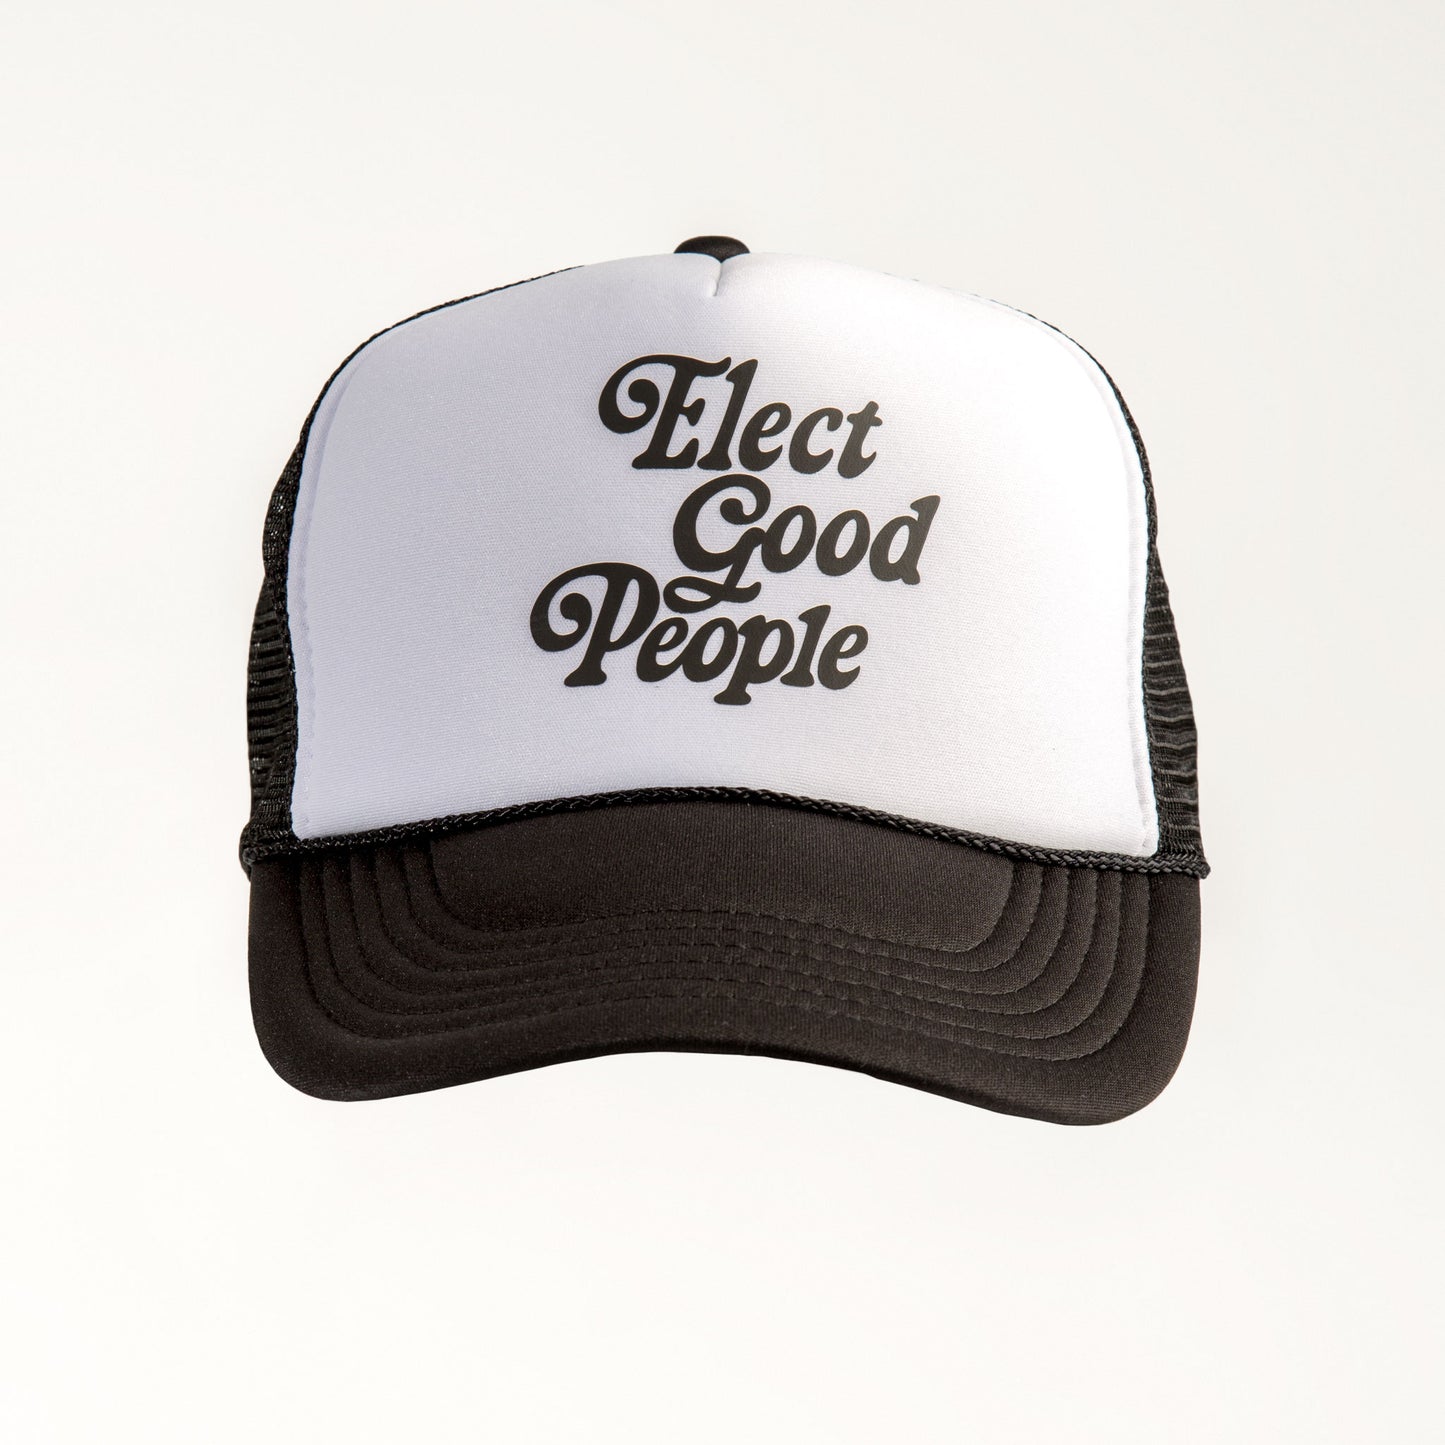 Black Trucker hat